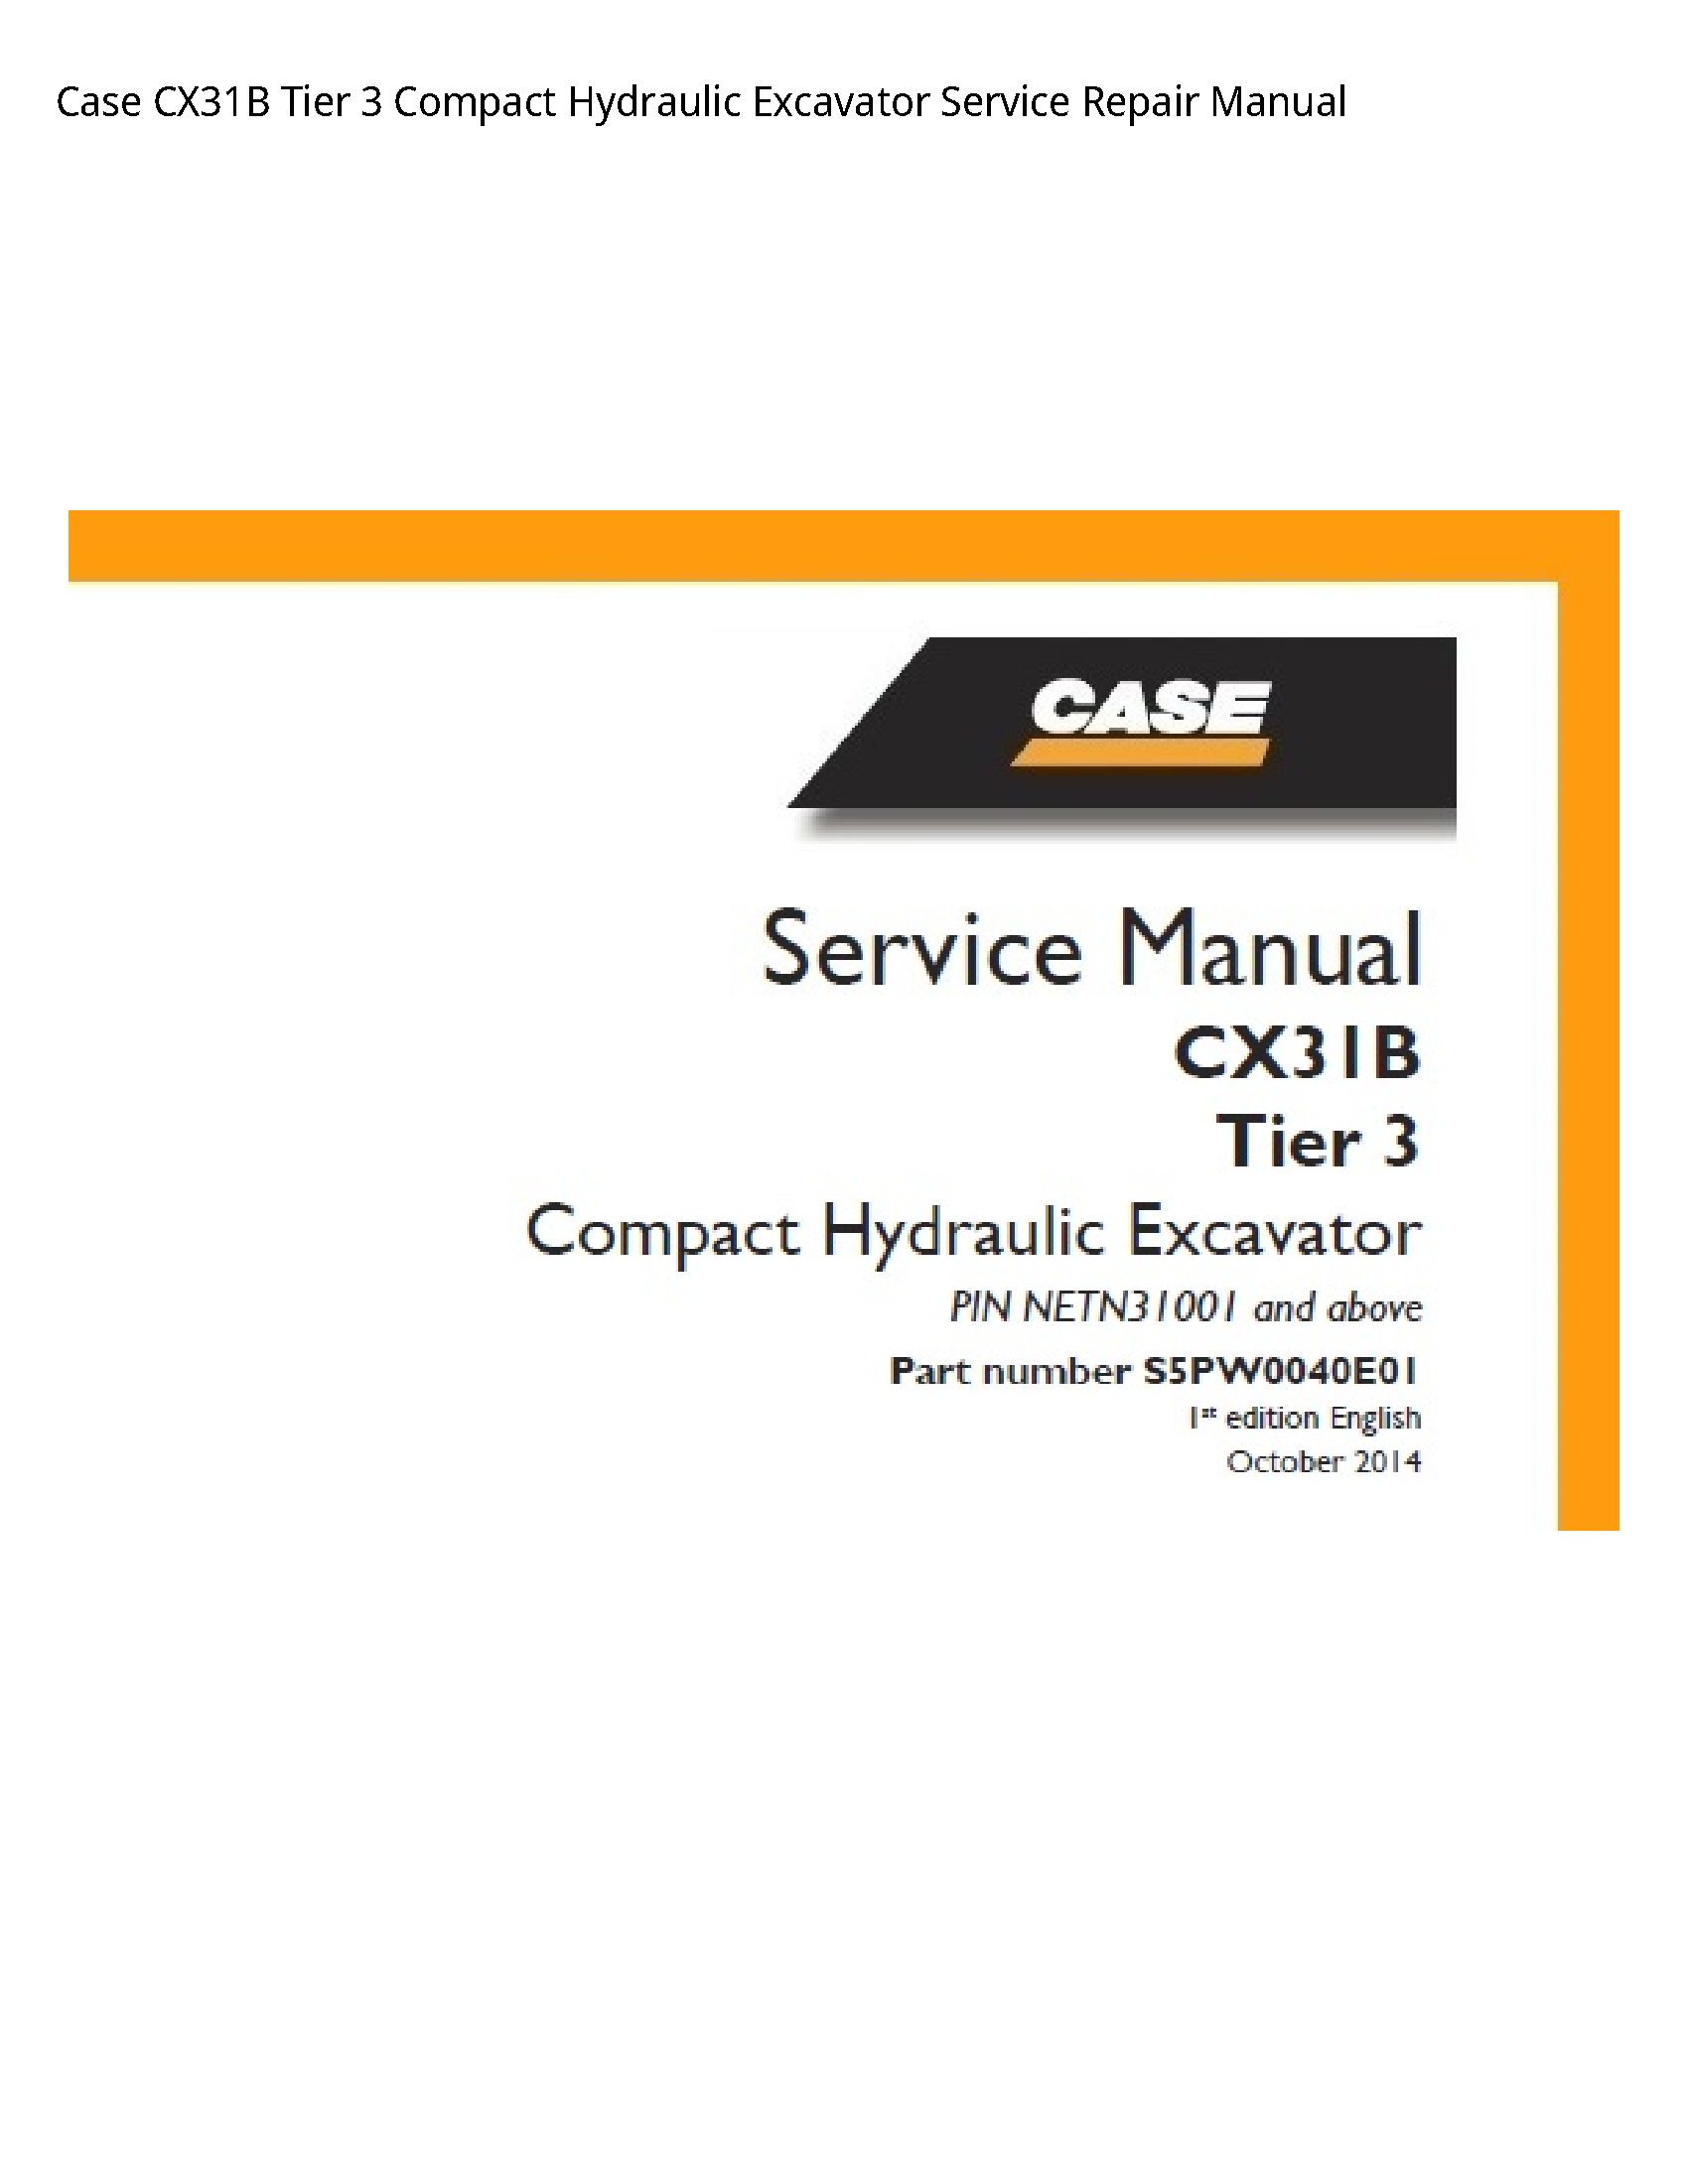 Case/Case IH CX31B Tier Compact Hydraulic Excavator manual